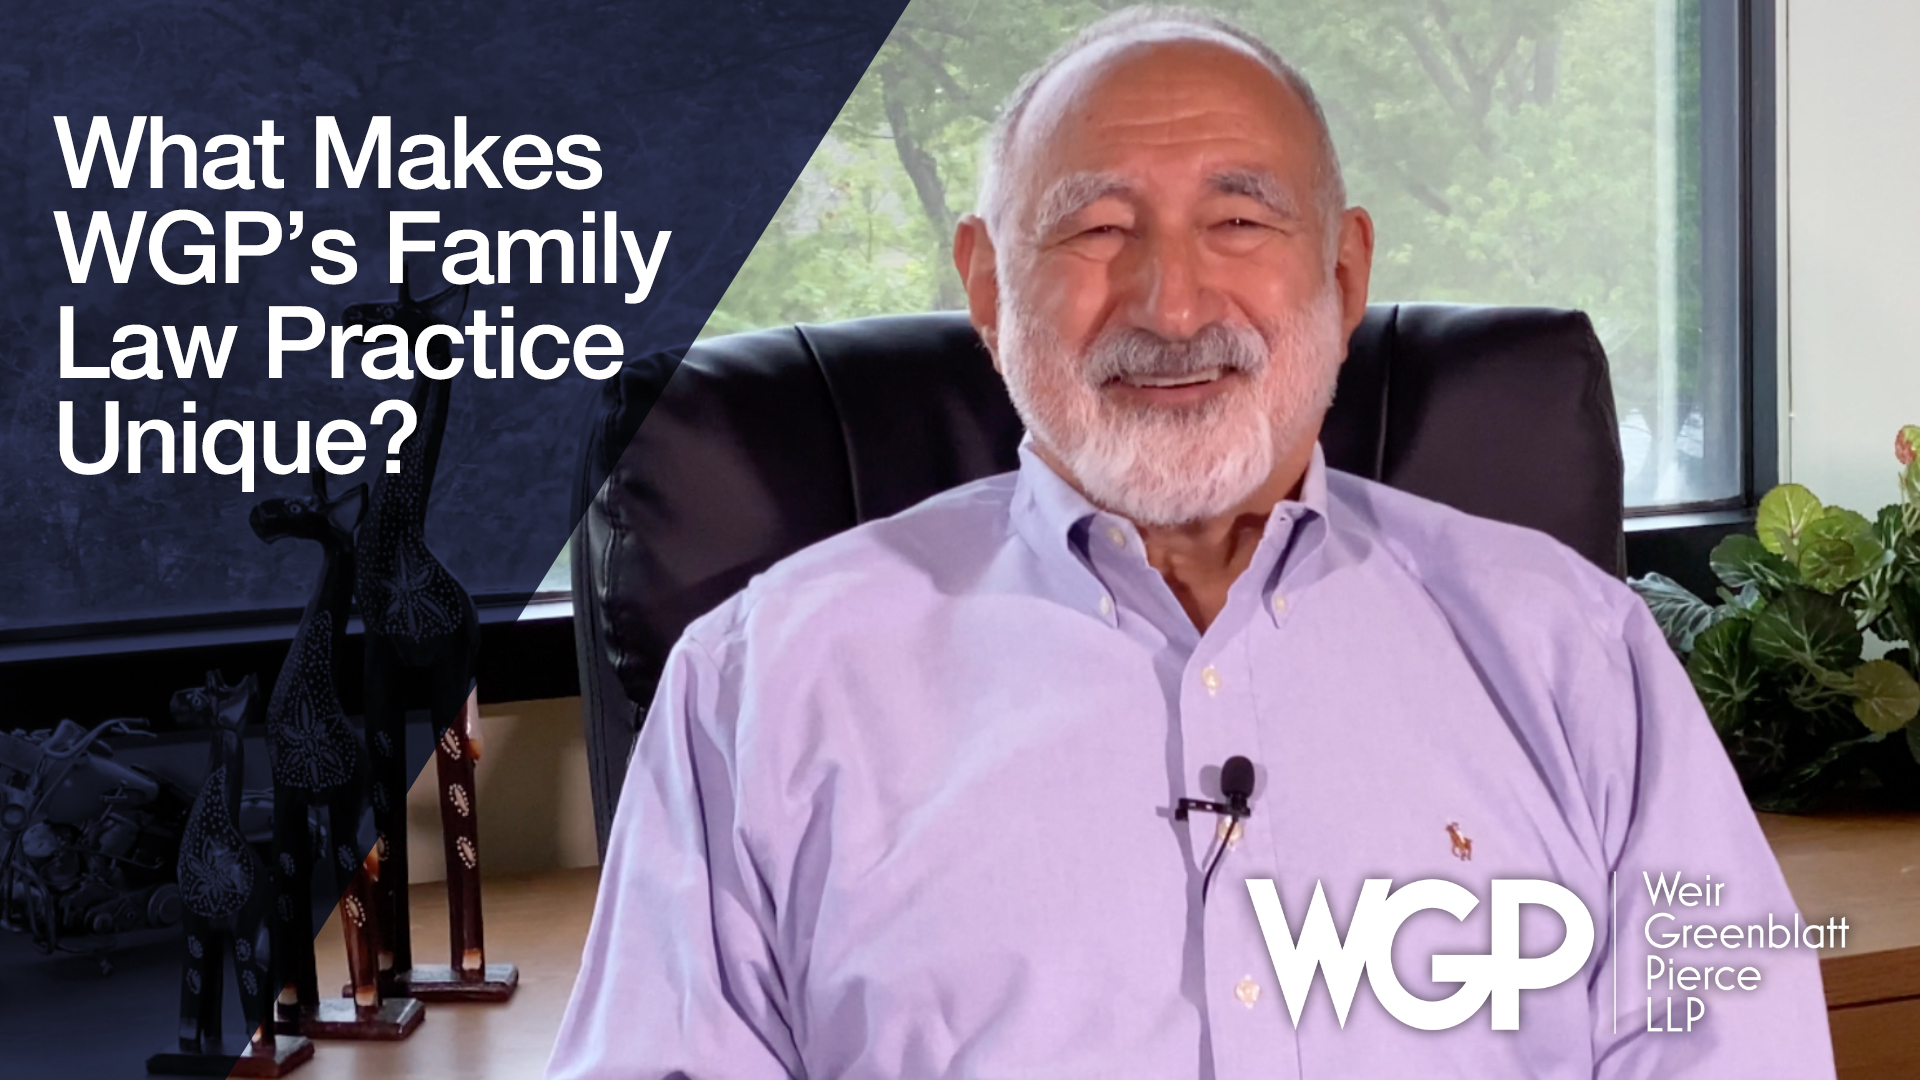 VIDEO: What makes WGP's family law practice unique?